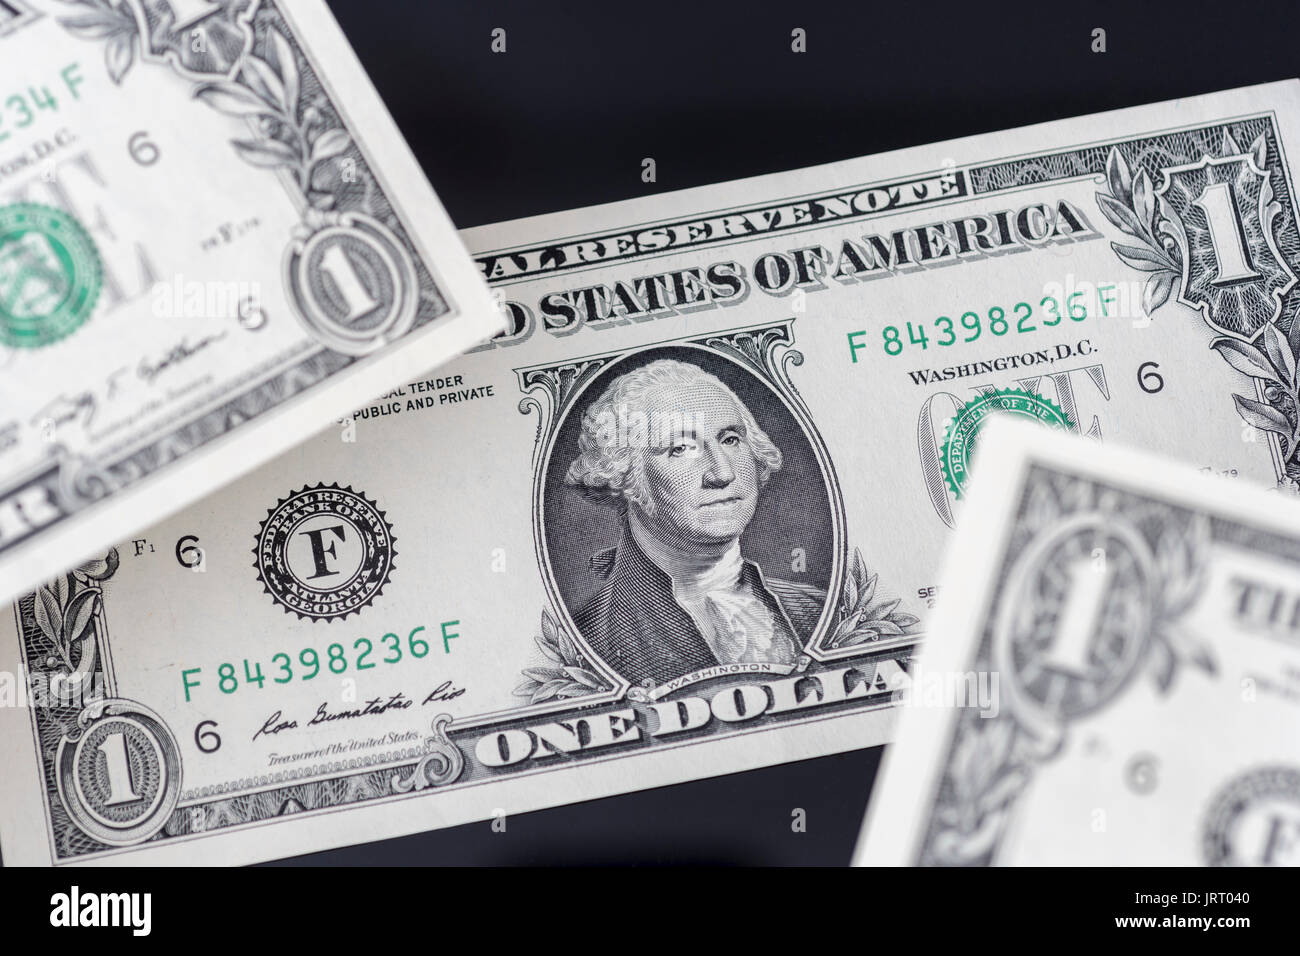 US / American $1 bills / banknotes. Metaphor Dollar exchange rate, value of US Dollar, US budget deficit, US banking crisis, the Biden economy. Stock Photo